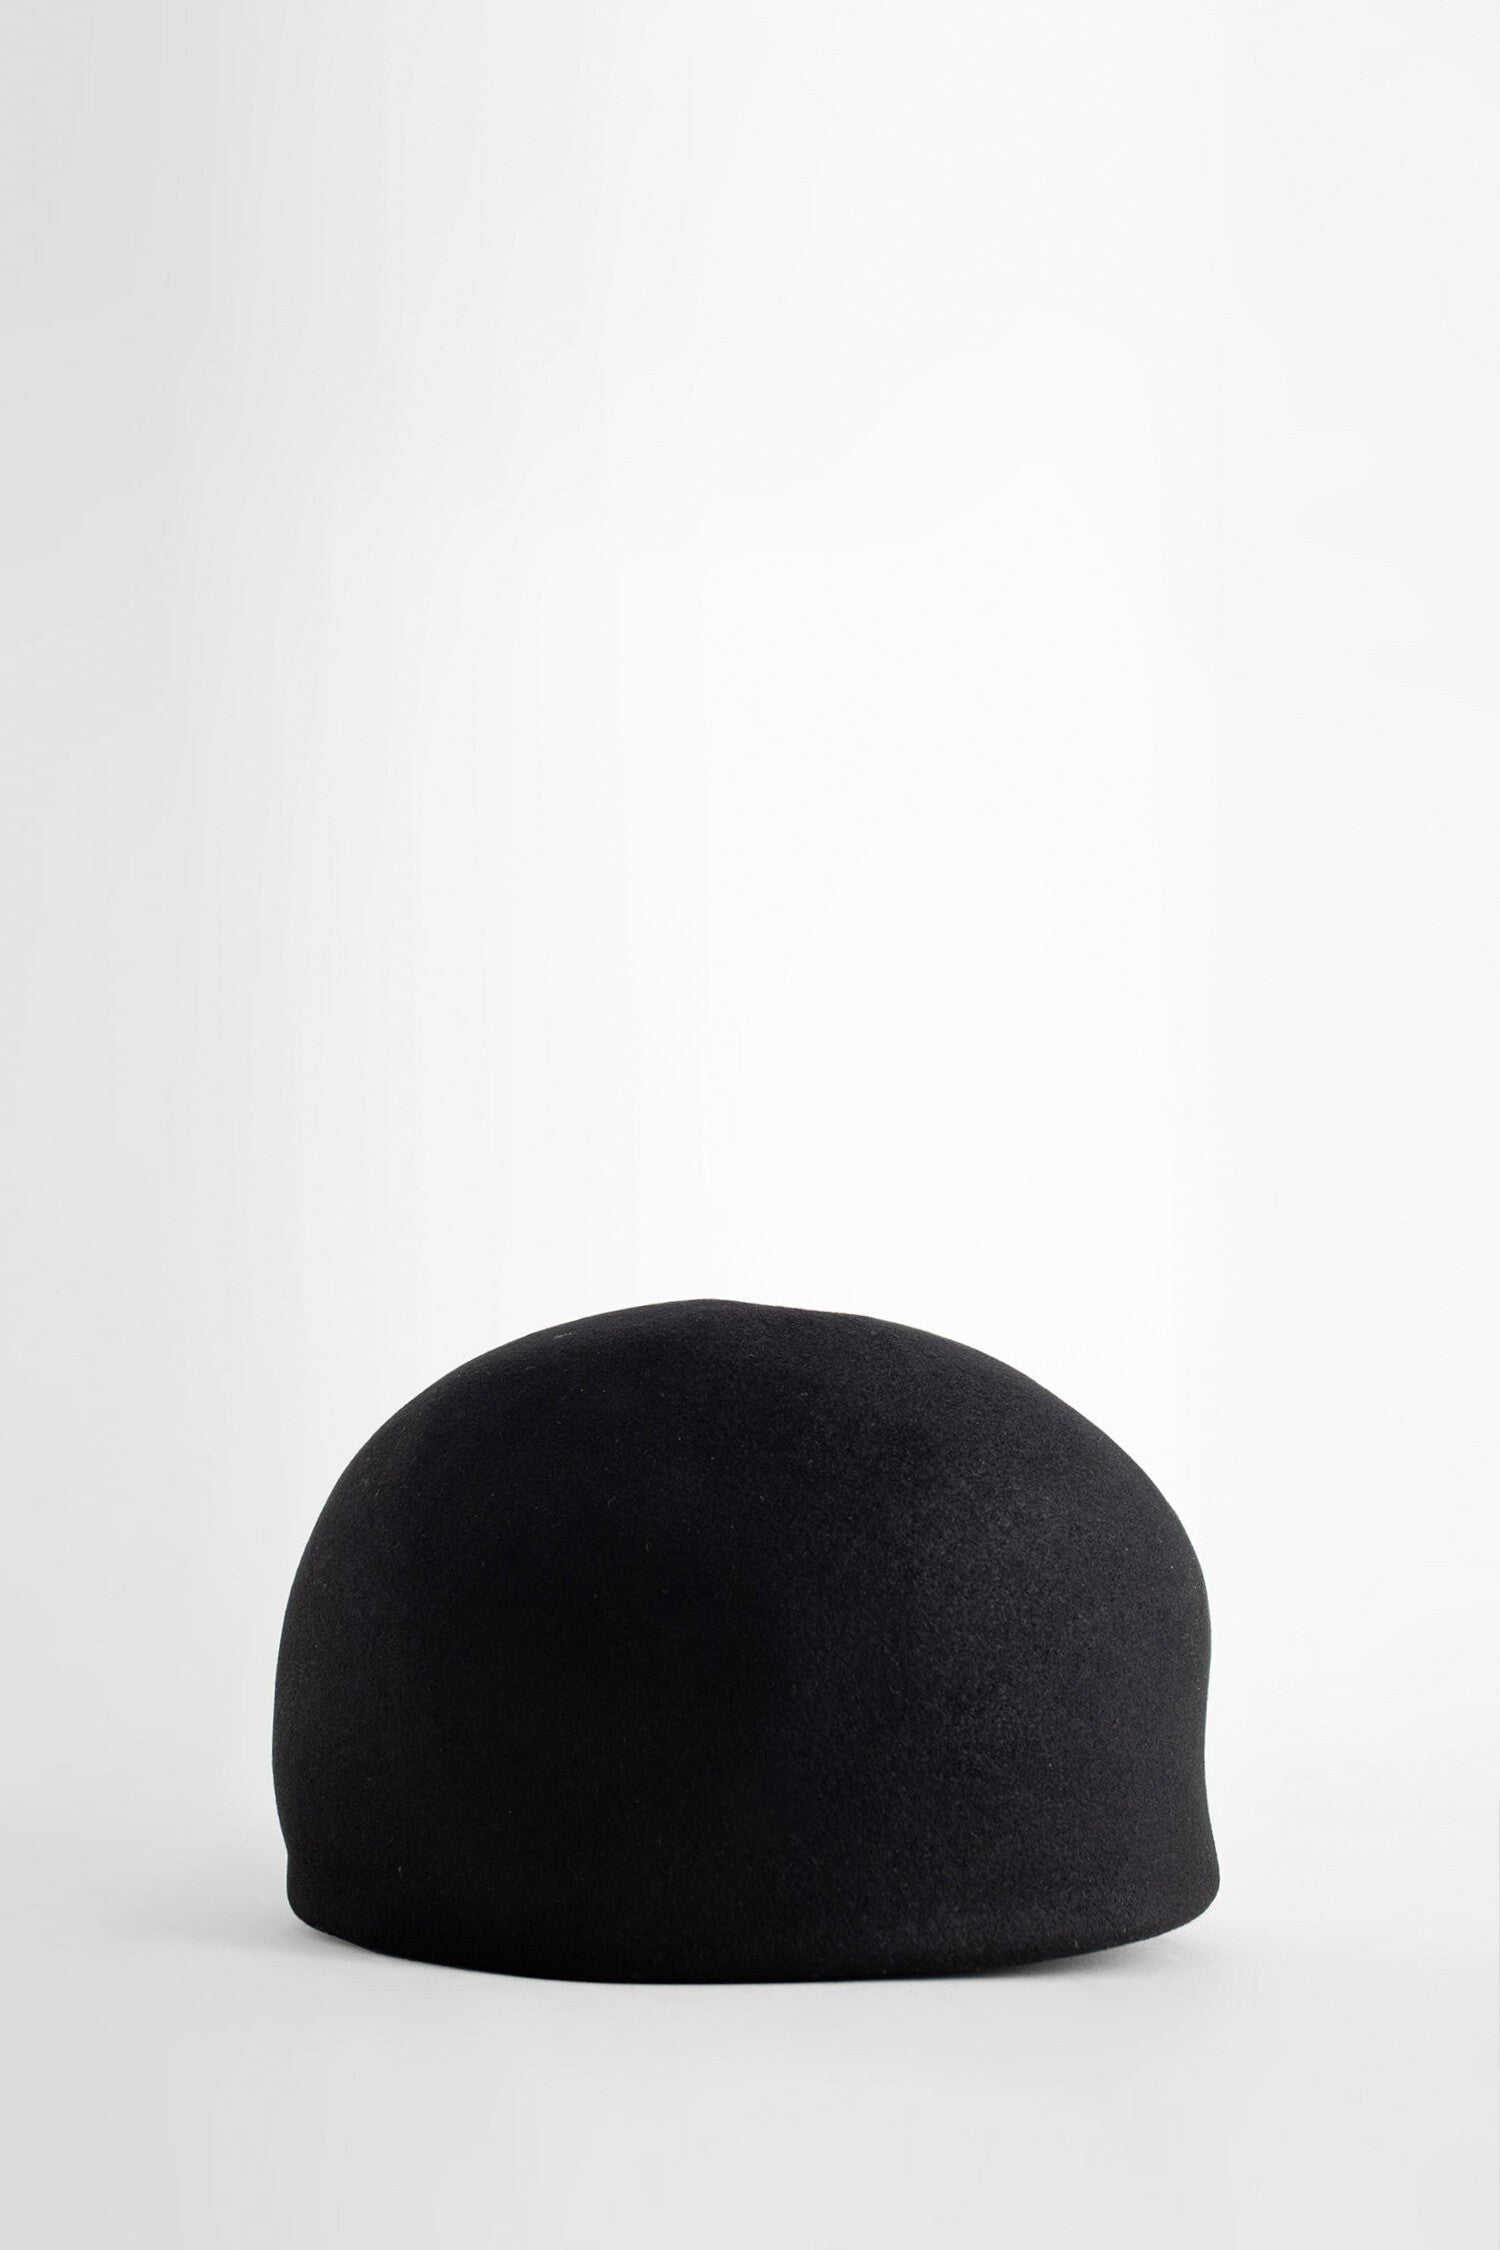 HORISAKI UNISEX BLACK HATS